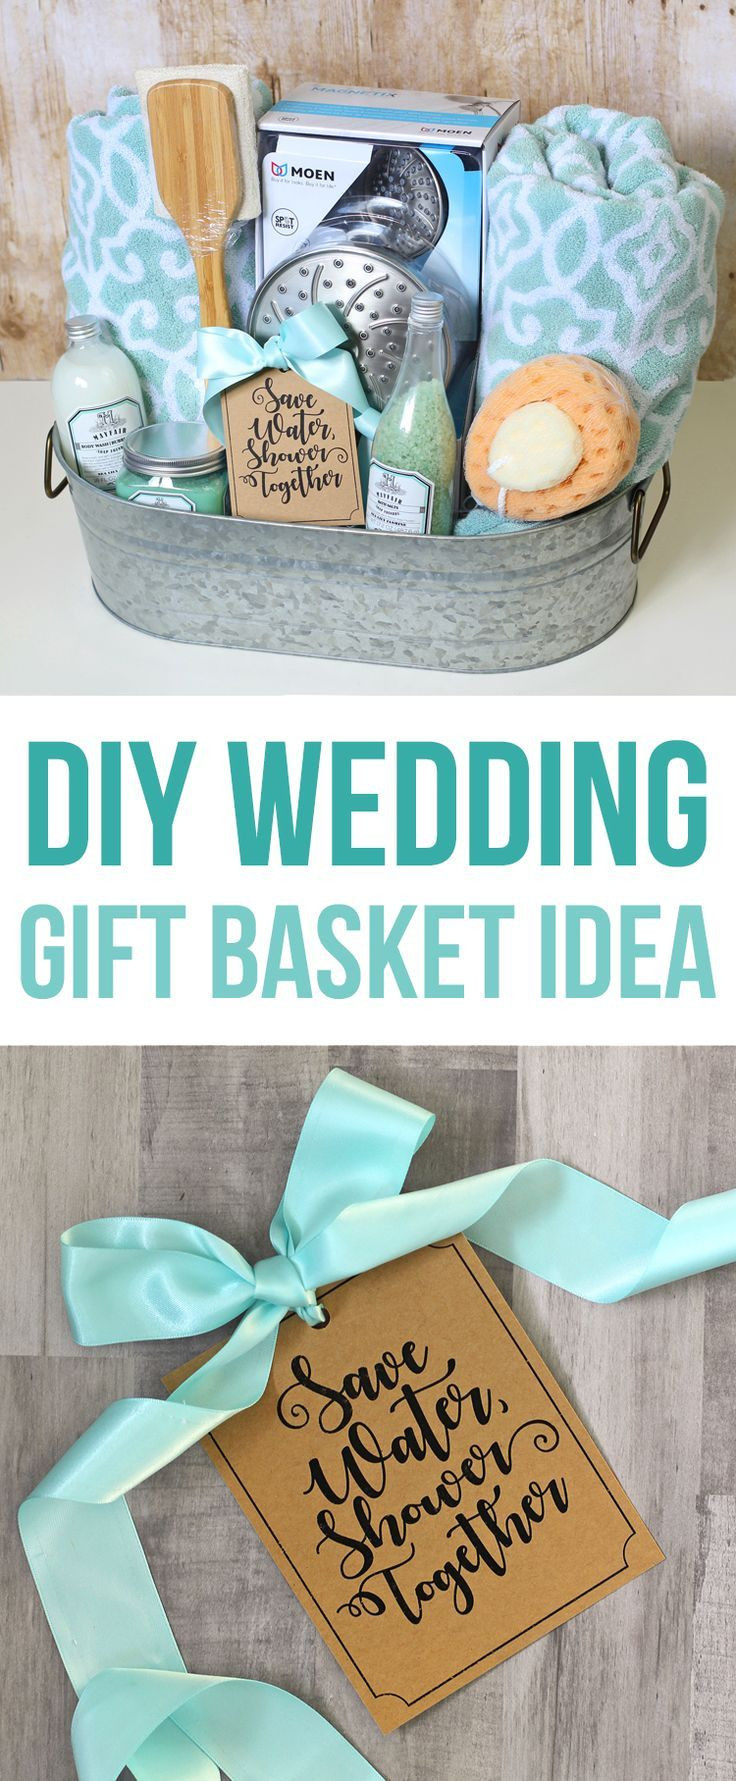 Bathroom Gift Basket Ideas
 This DIY wedding t basket idea has a shower theme and